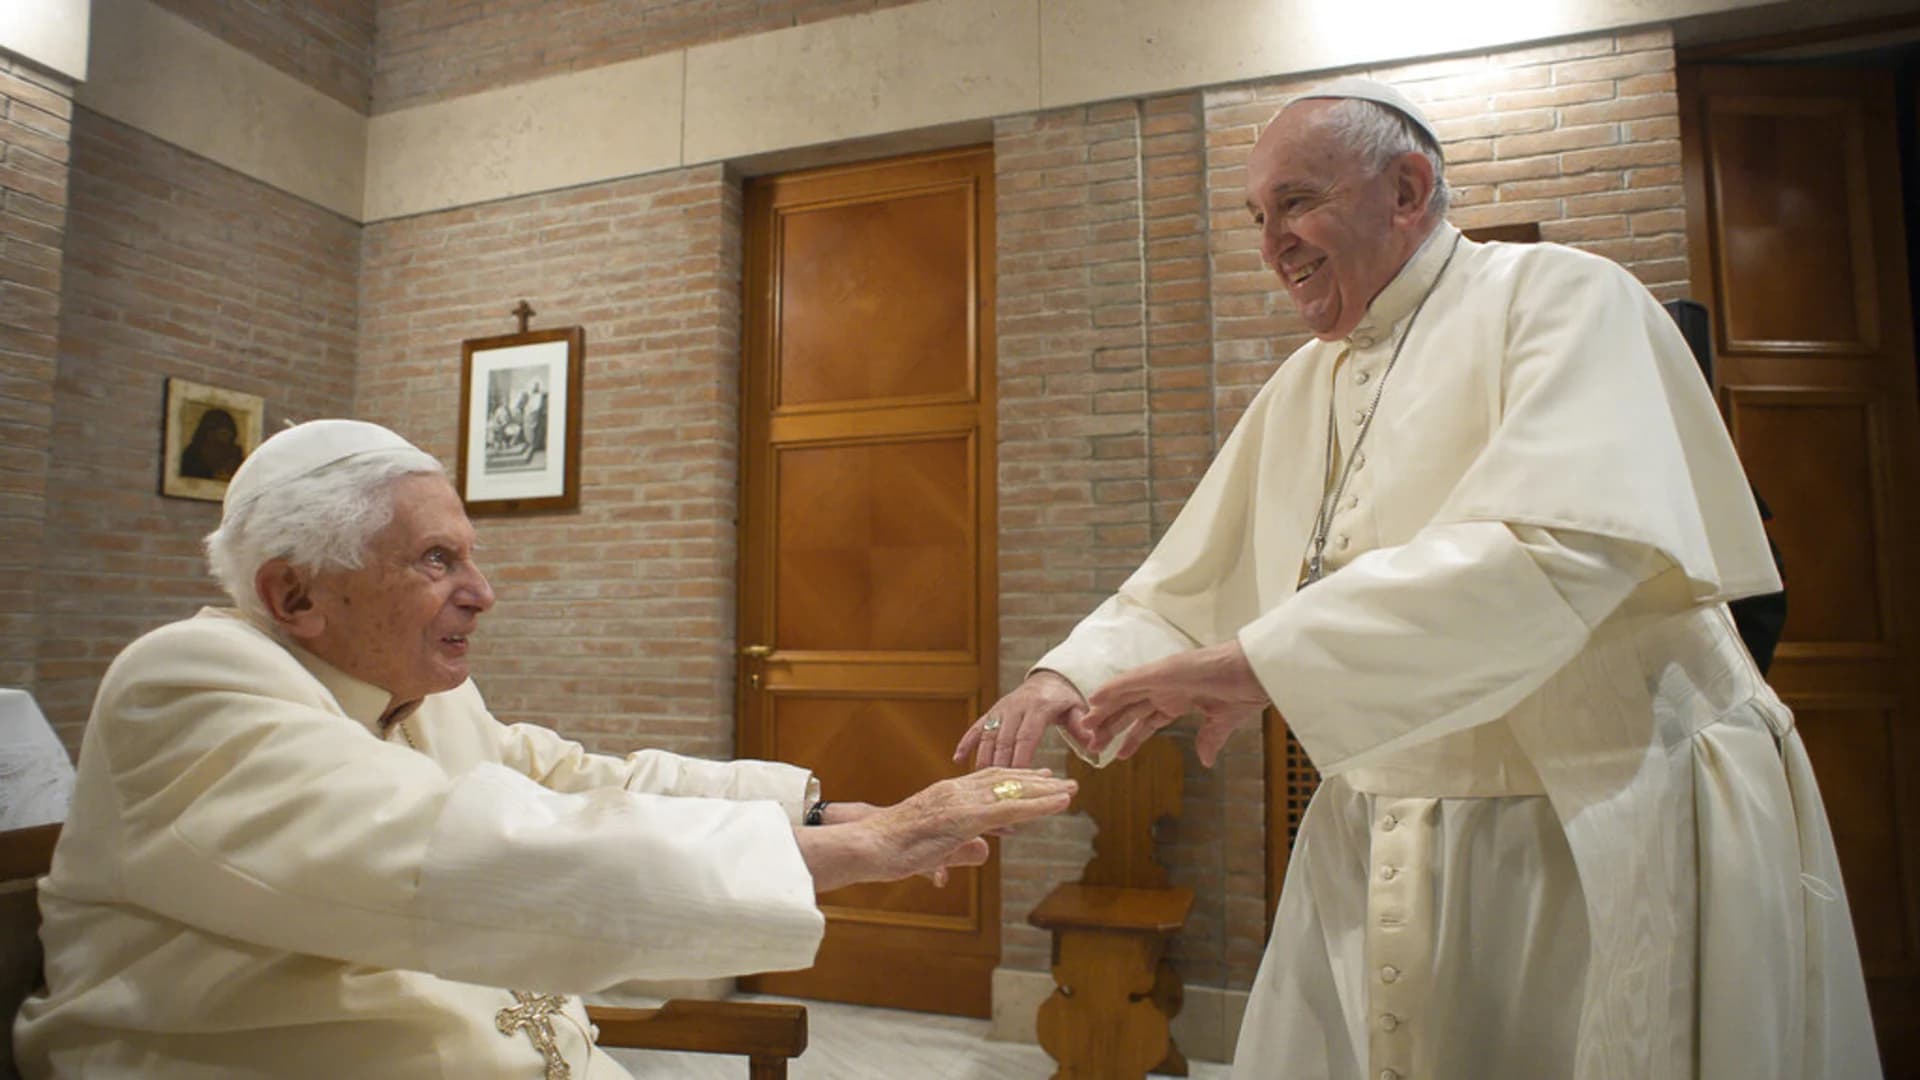 Vatican says health of retired pope Benedict XVI ‘worsening’